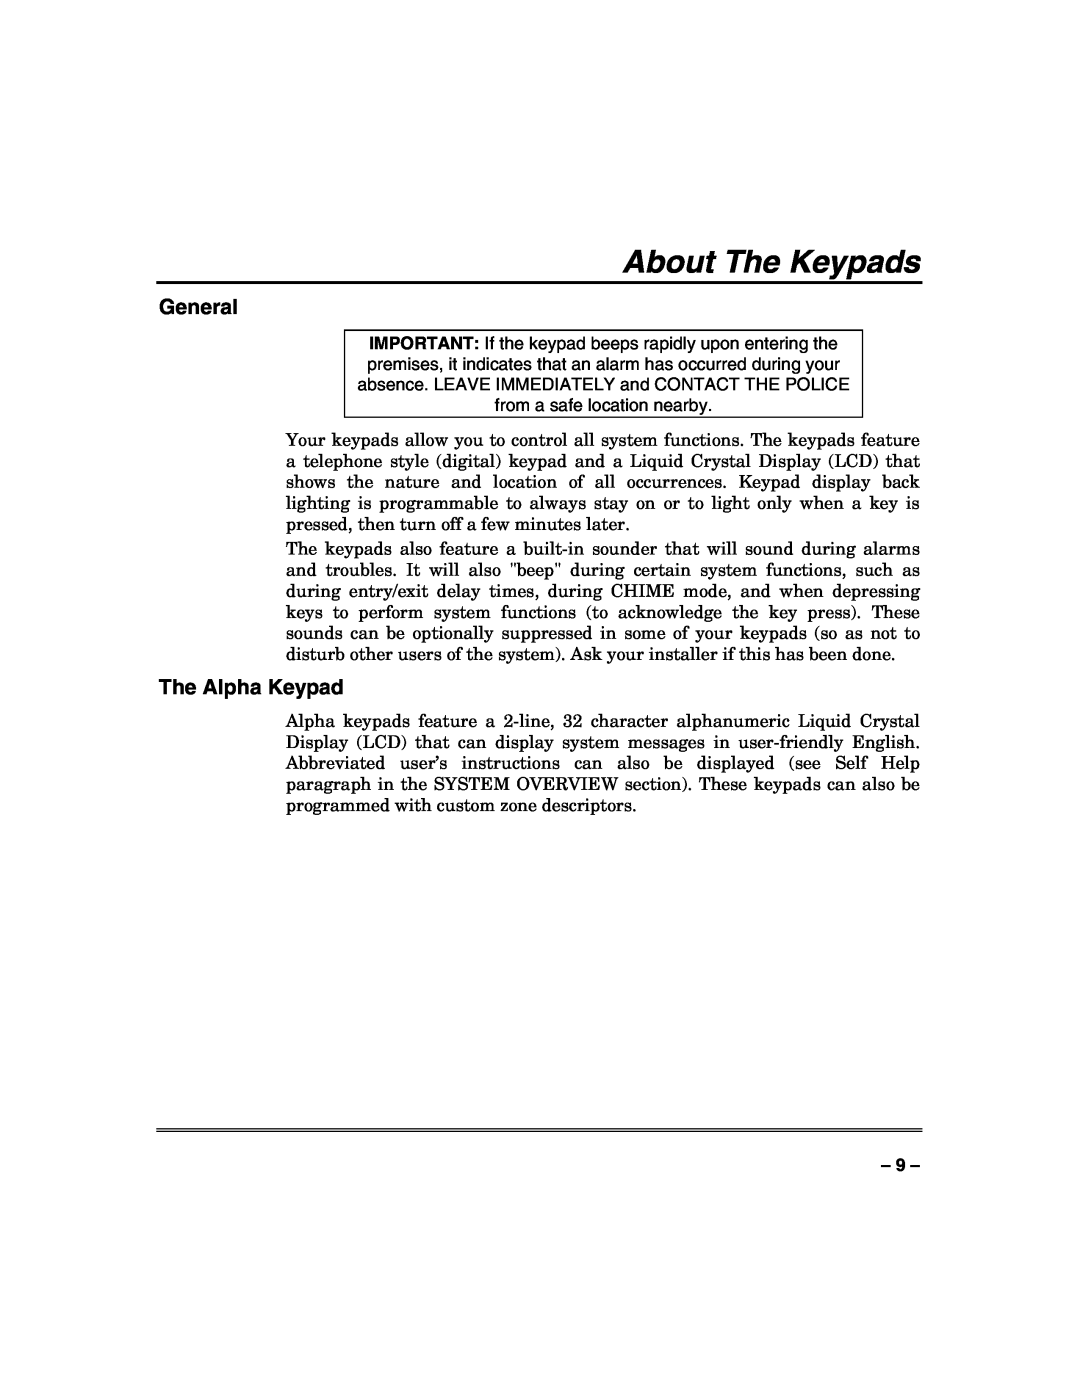 Honeywell VISTA-50PUL manual About The Keypads, The Alpha Keypad, General 